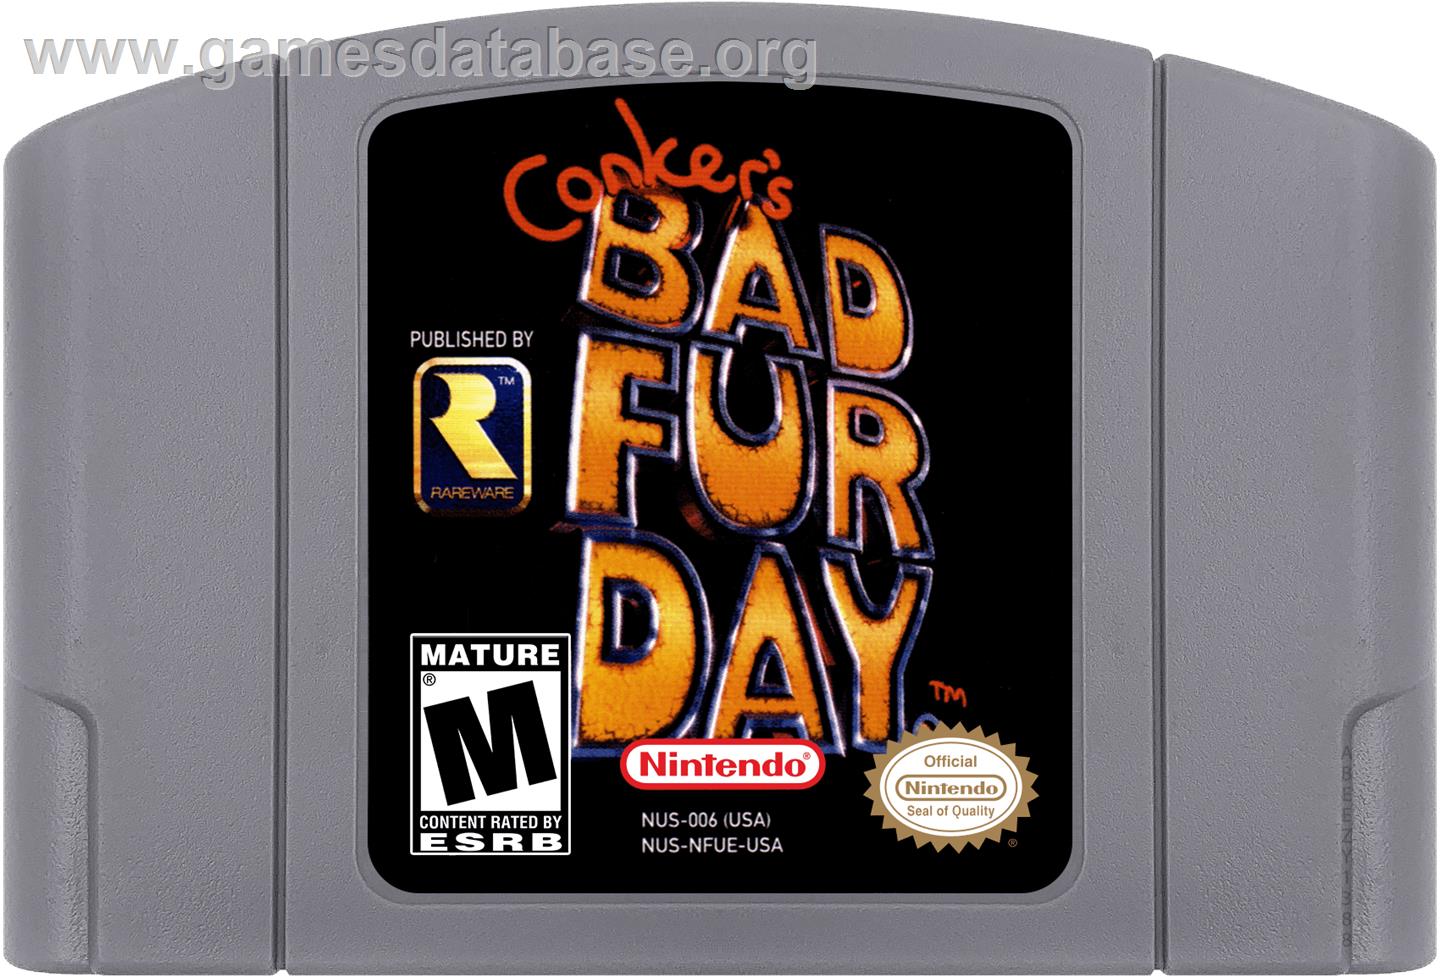 Conker's Bad Fur Day - Nintendo N64 - Artwork - Cartridge